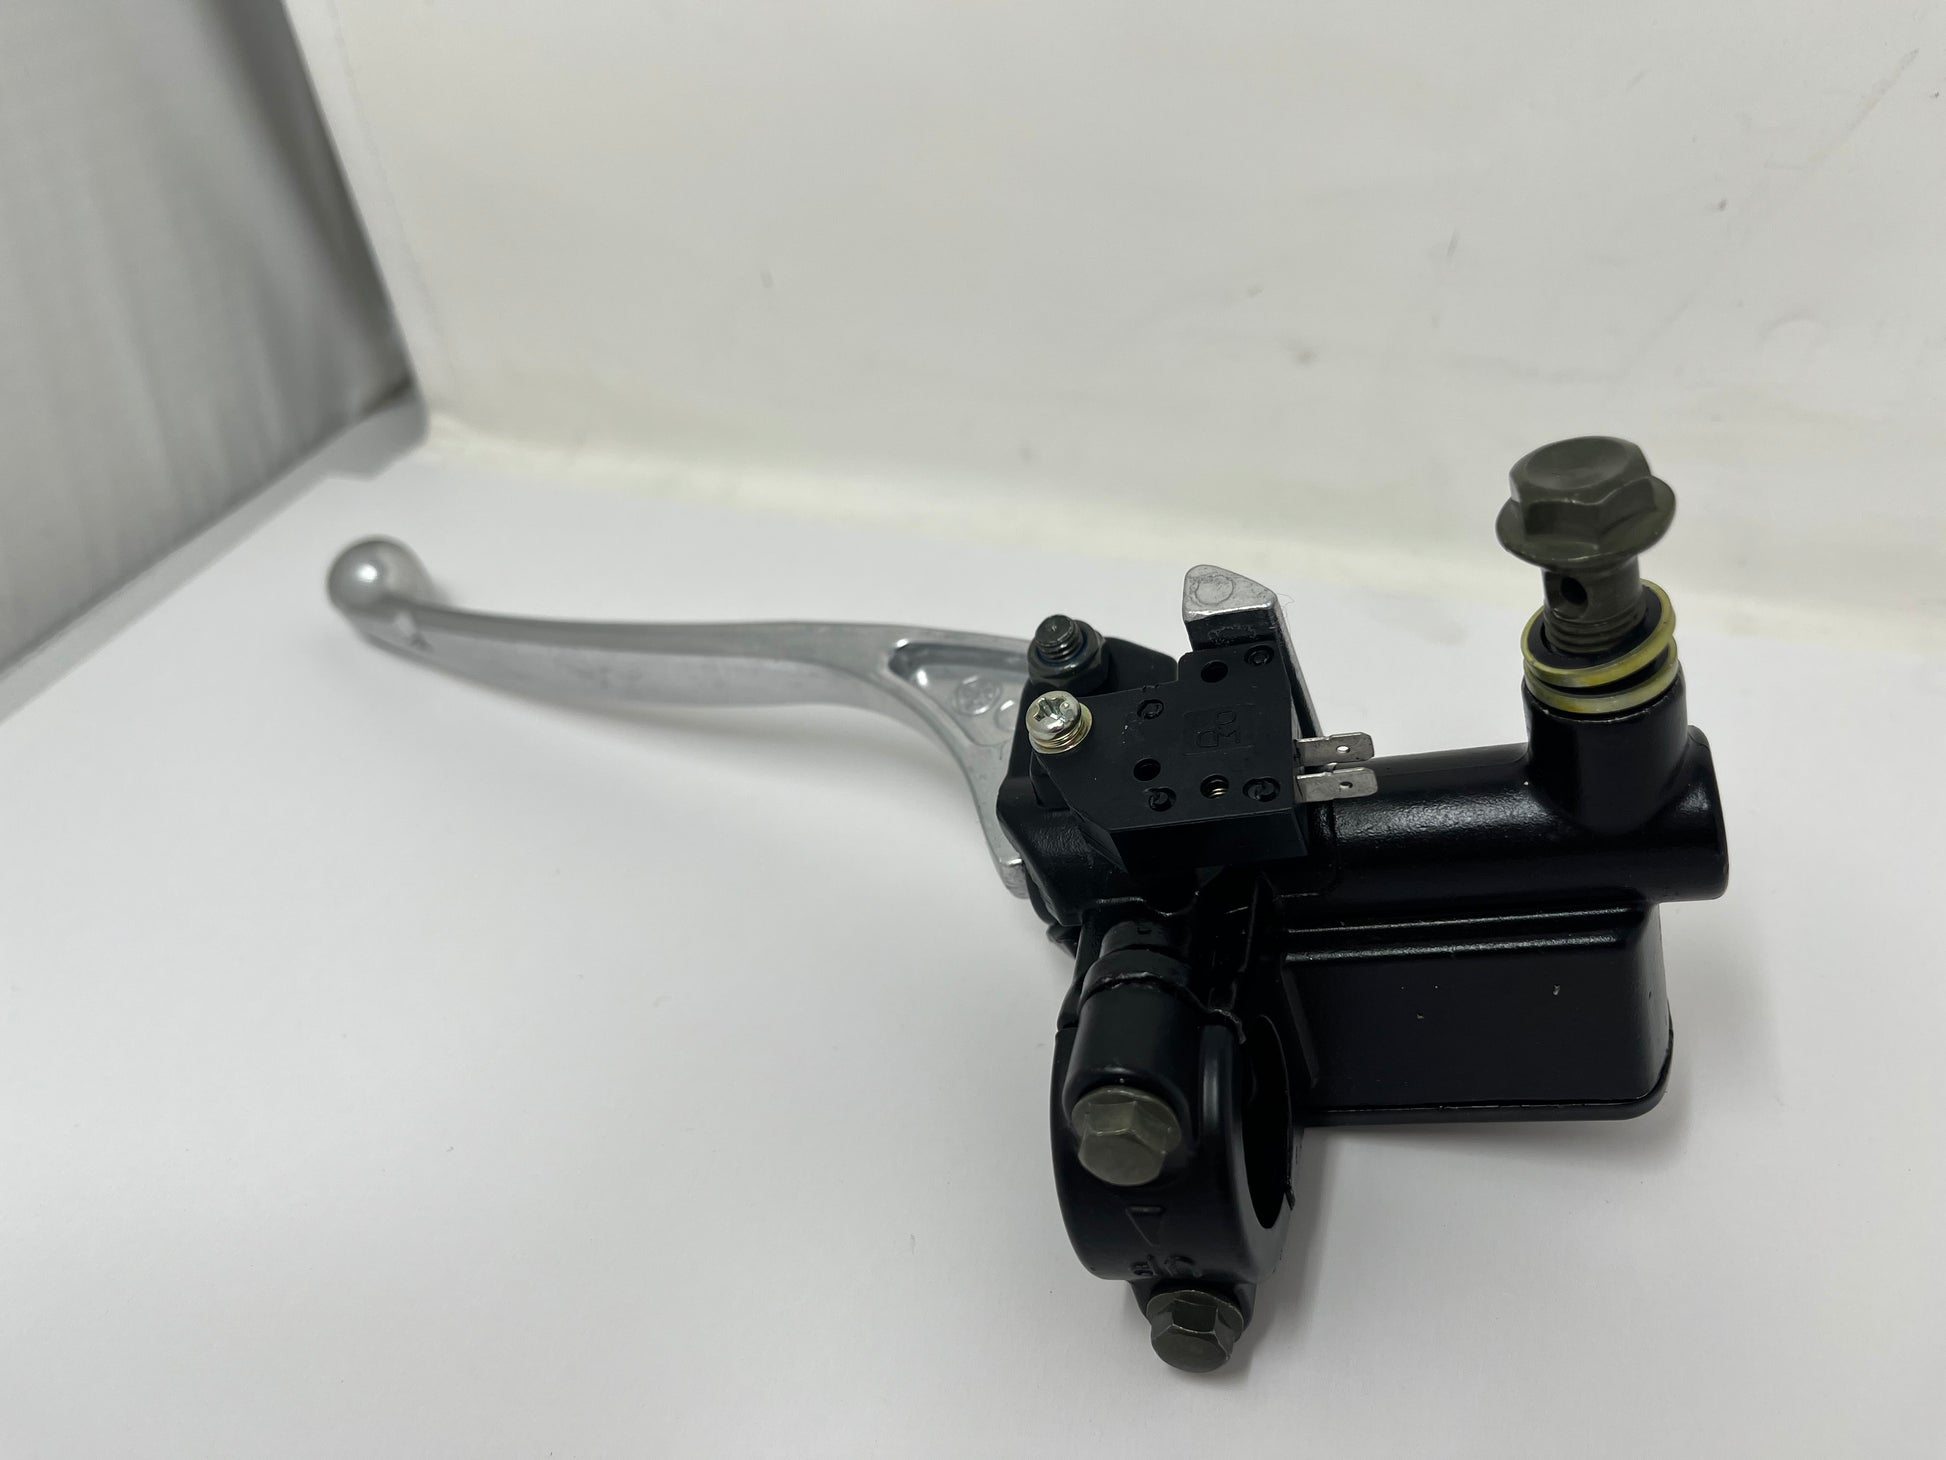 DF50SST right brake handle for X18 for sale. Master Cylinder for brake lever